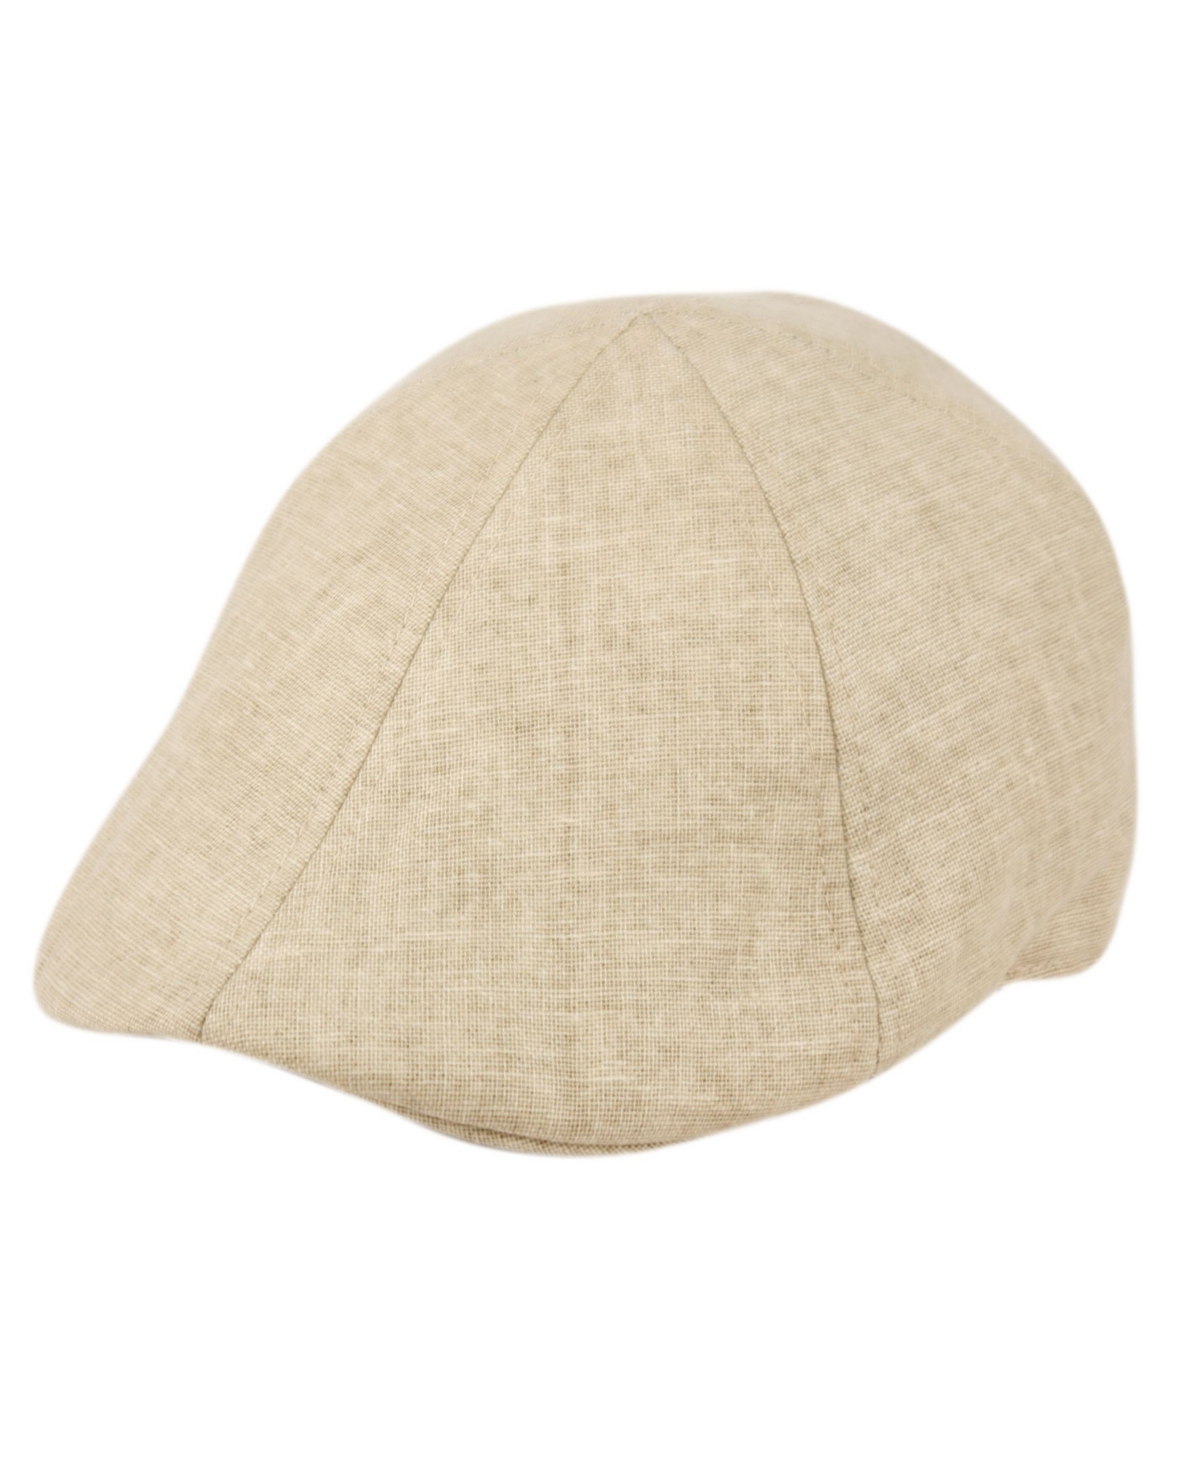 Epoch Hats Company Women's Duckbill Ivy Linen Cap